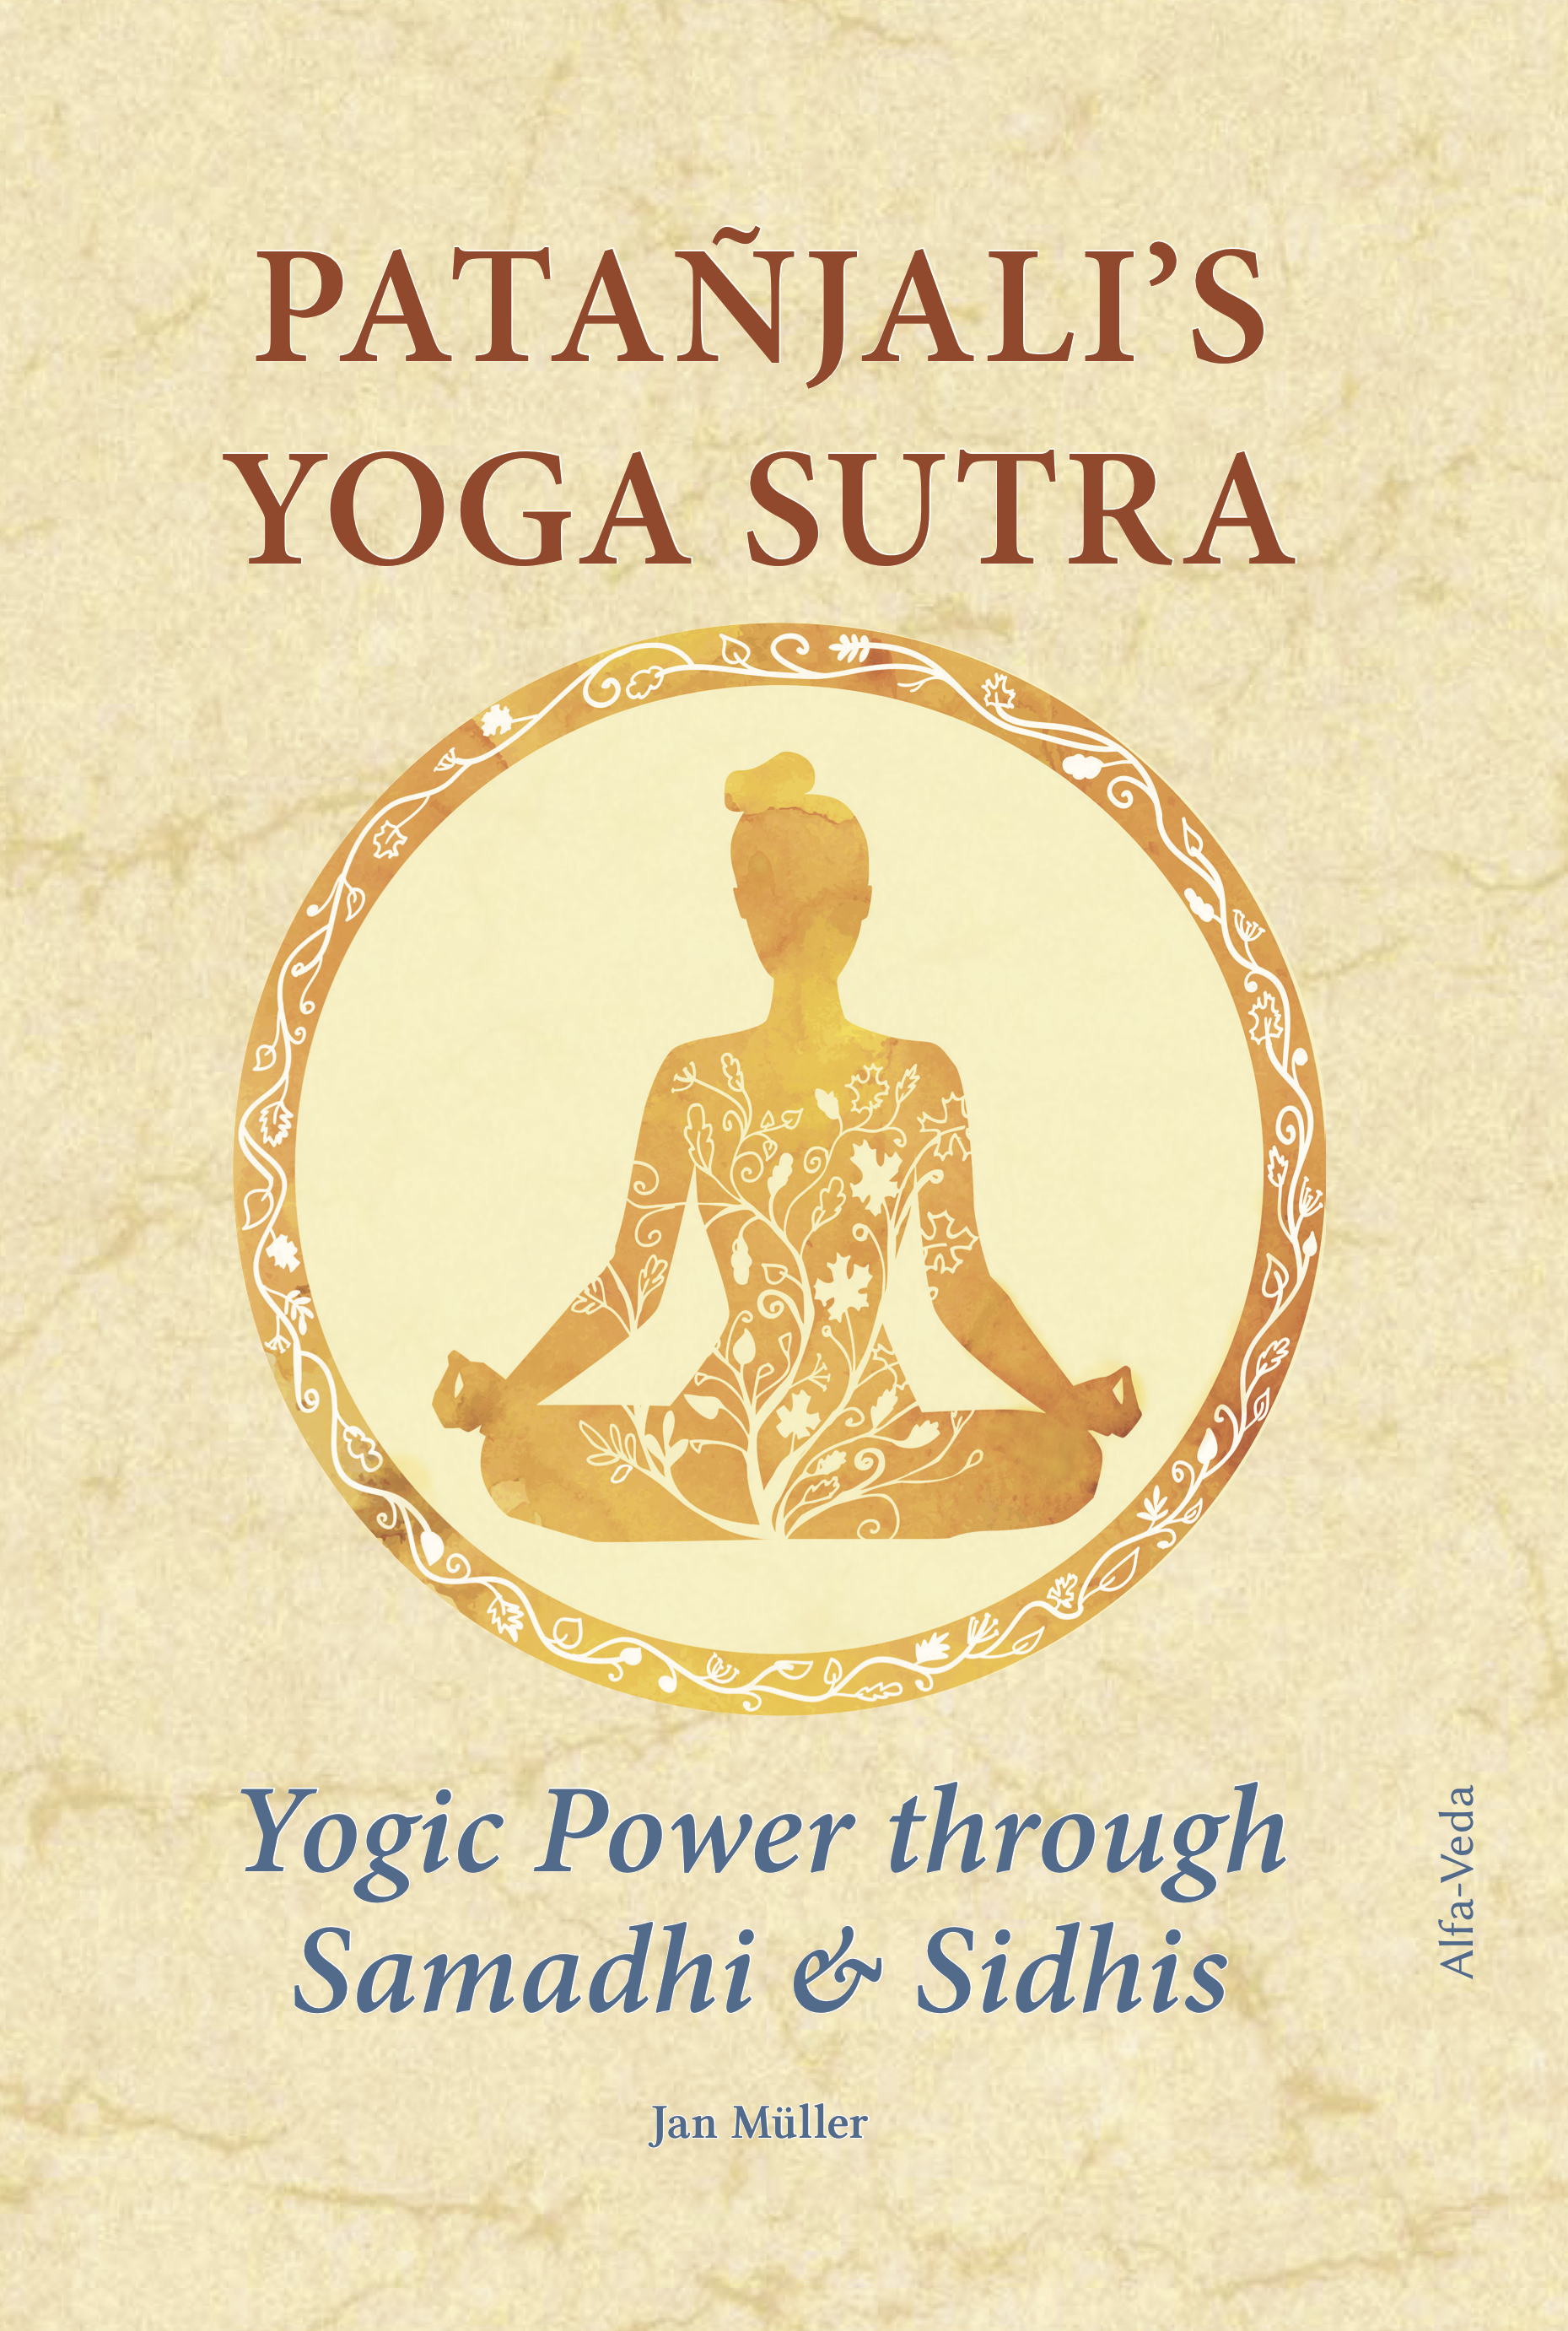 Patañjalis Yoga-Sutra: Yogic Power through Samadhi and Sidhis